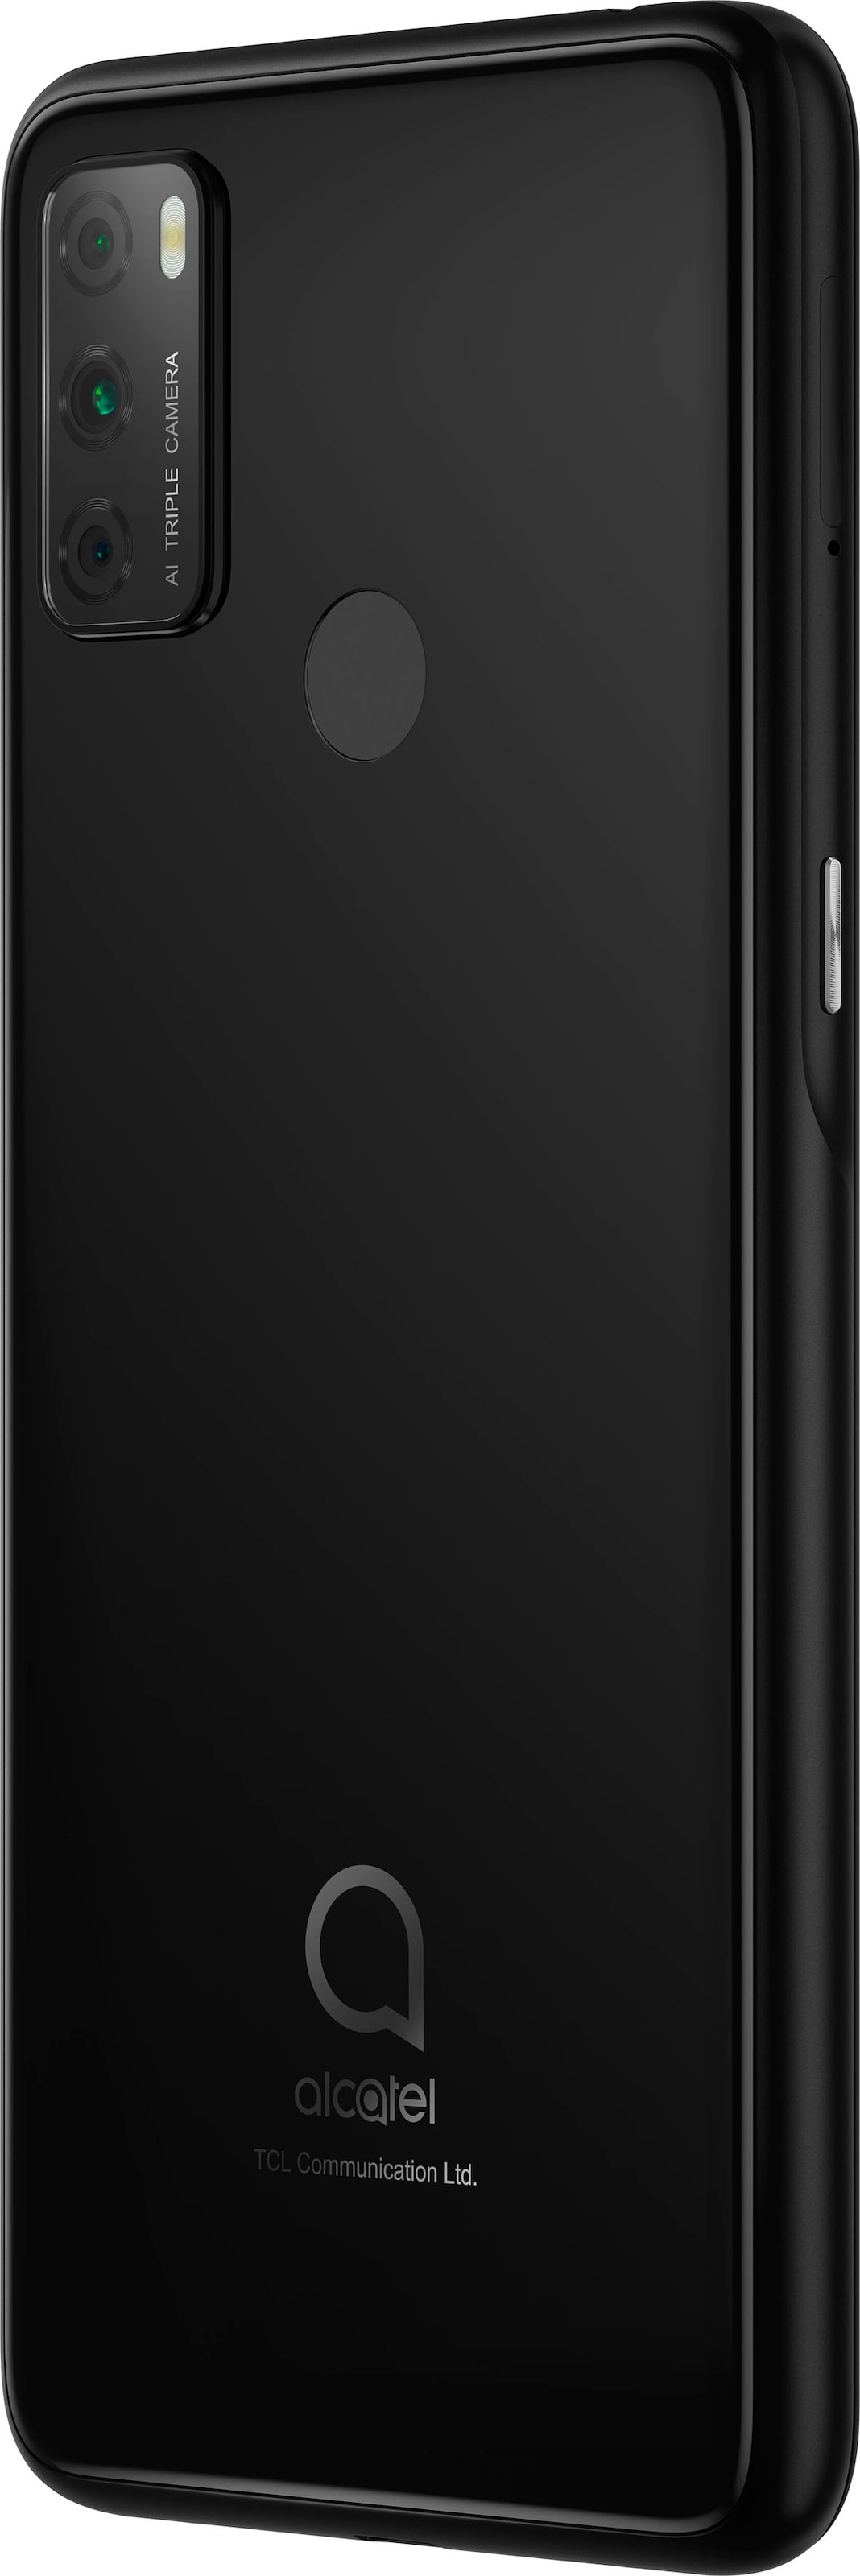 Alcatel Smartphone »ALCATEL 3L (2021)«, Jewelry Black, 16,56 cm/6,52 Zoll,  64 GB Speicherplatz, 48 MP Kamera jetzt im OTTO Online Shop